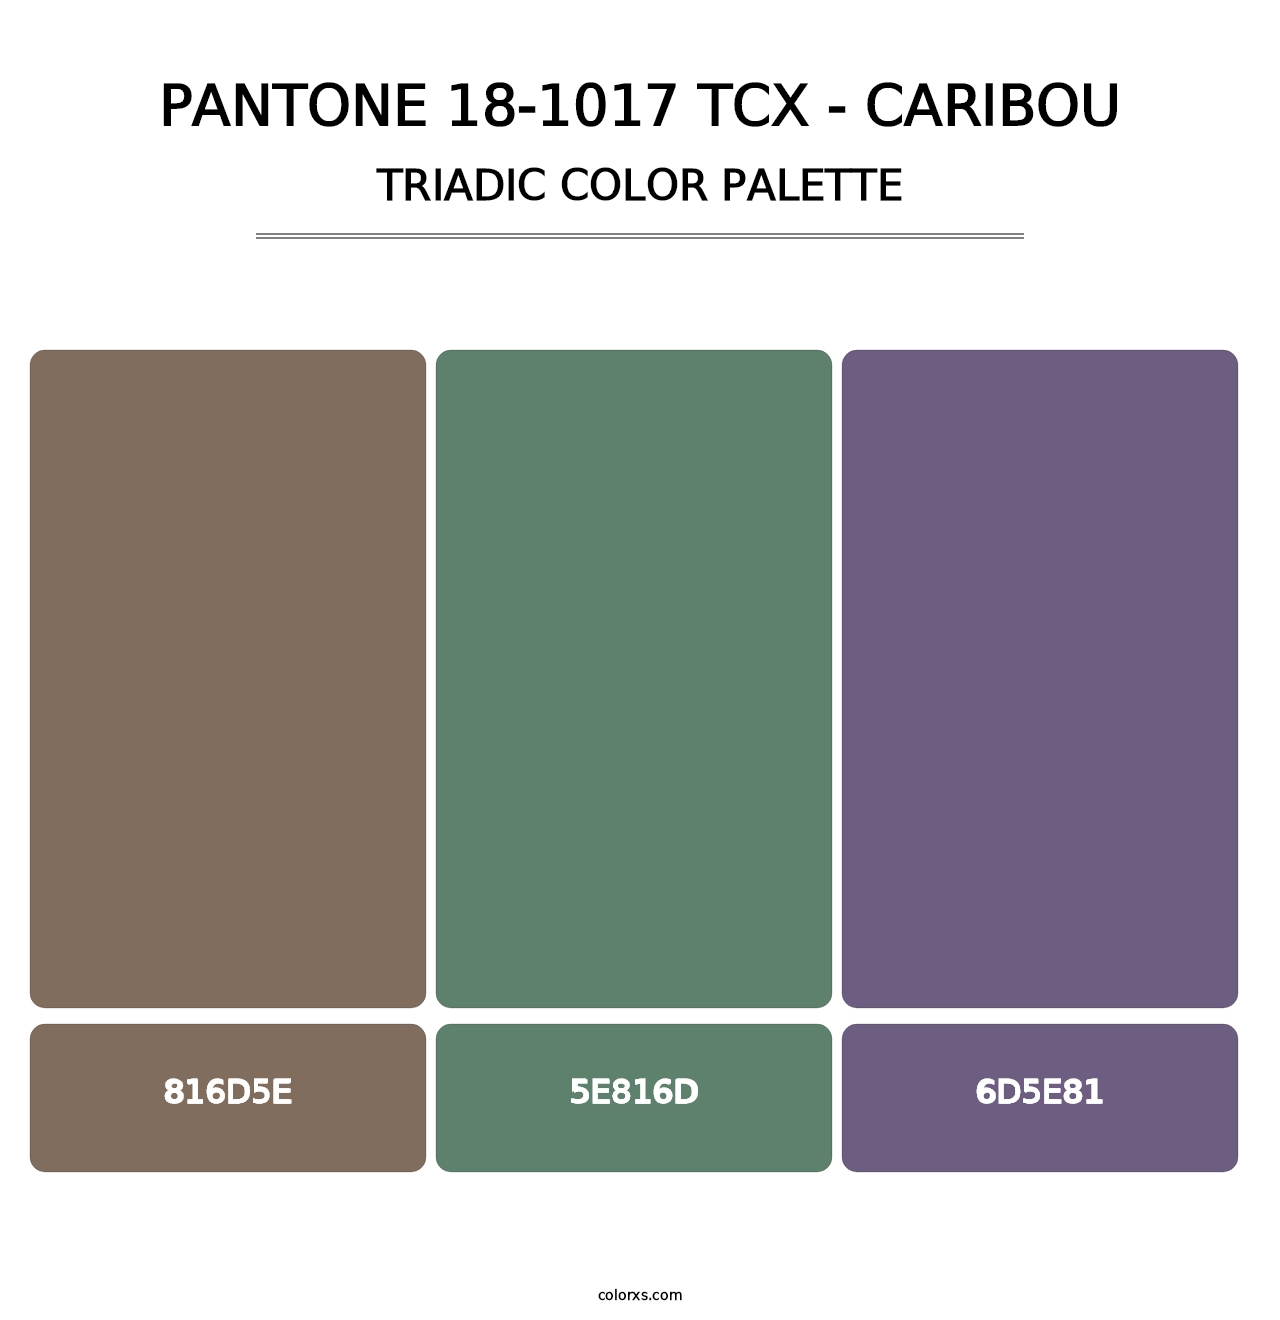 PANTONE 18-1017 TCX - Caribou - Triadic Color Palette